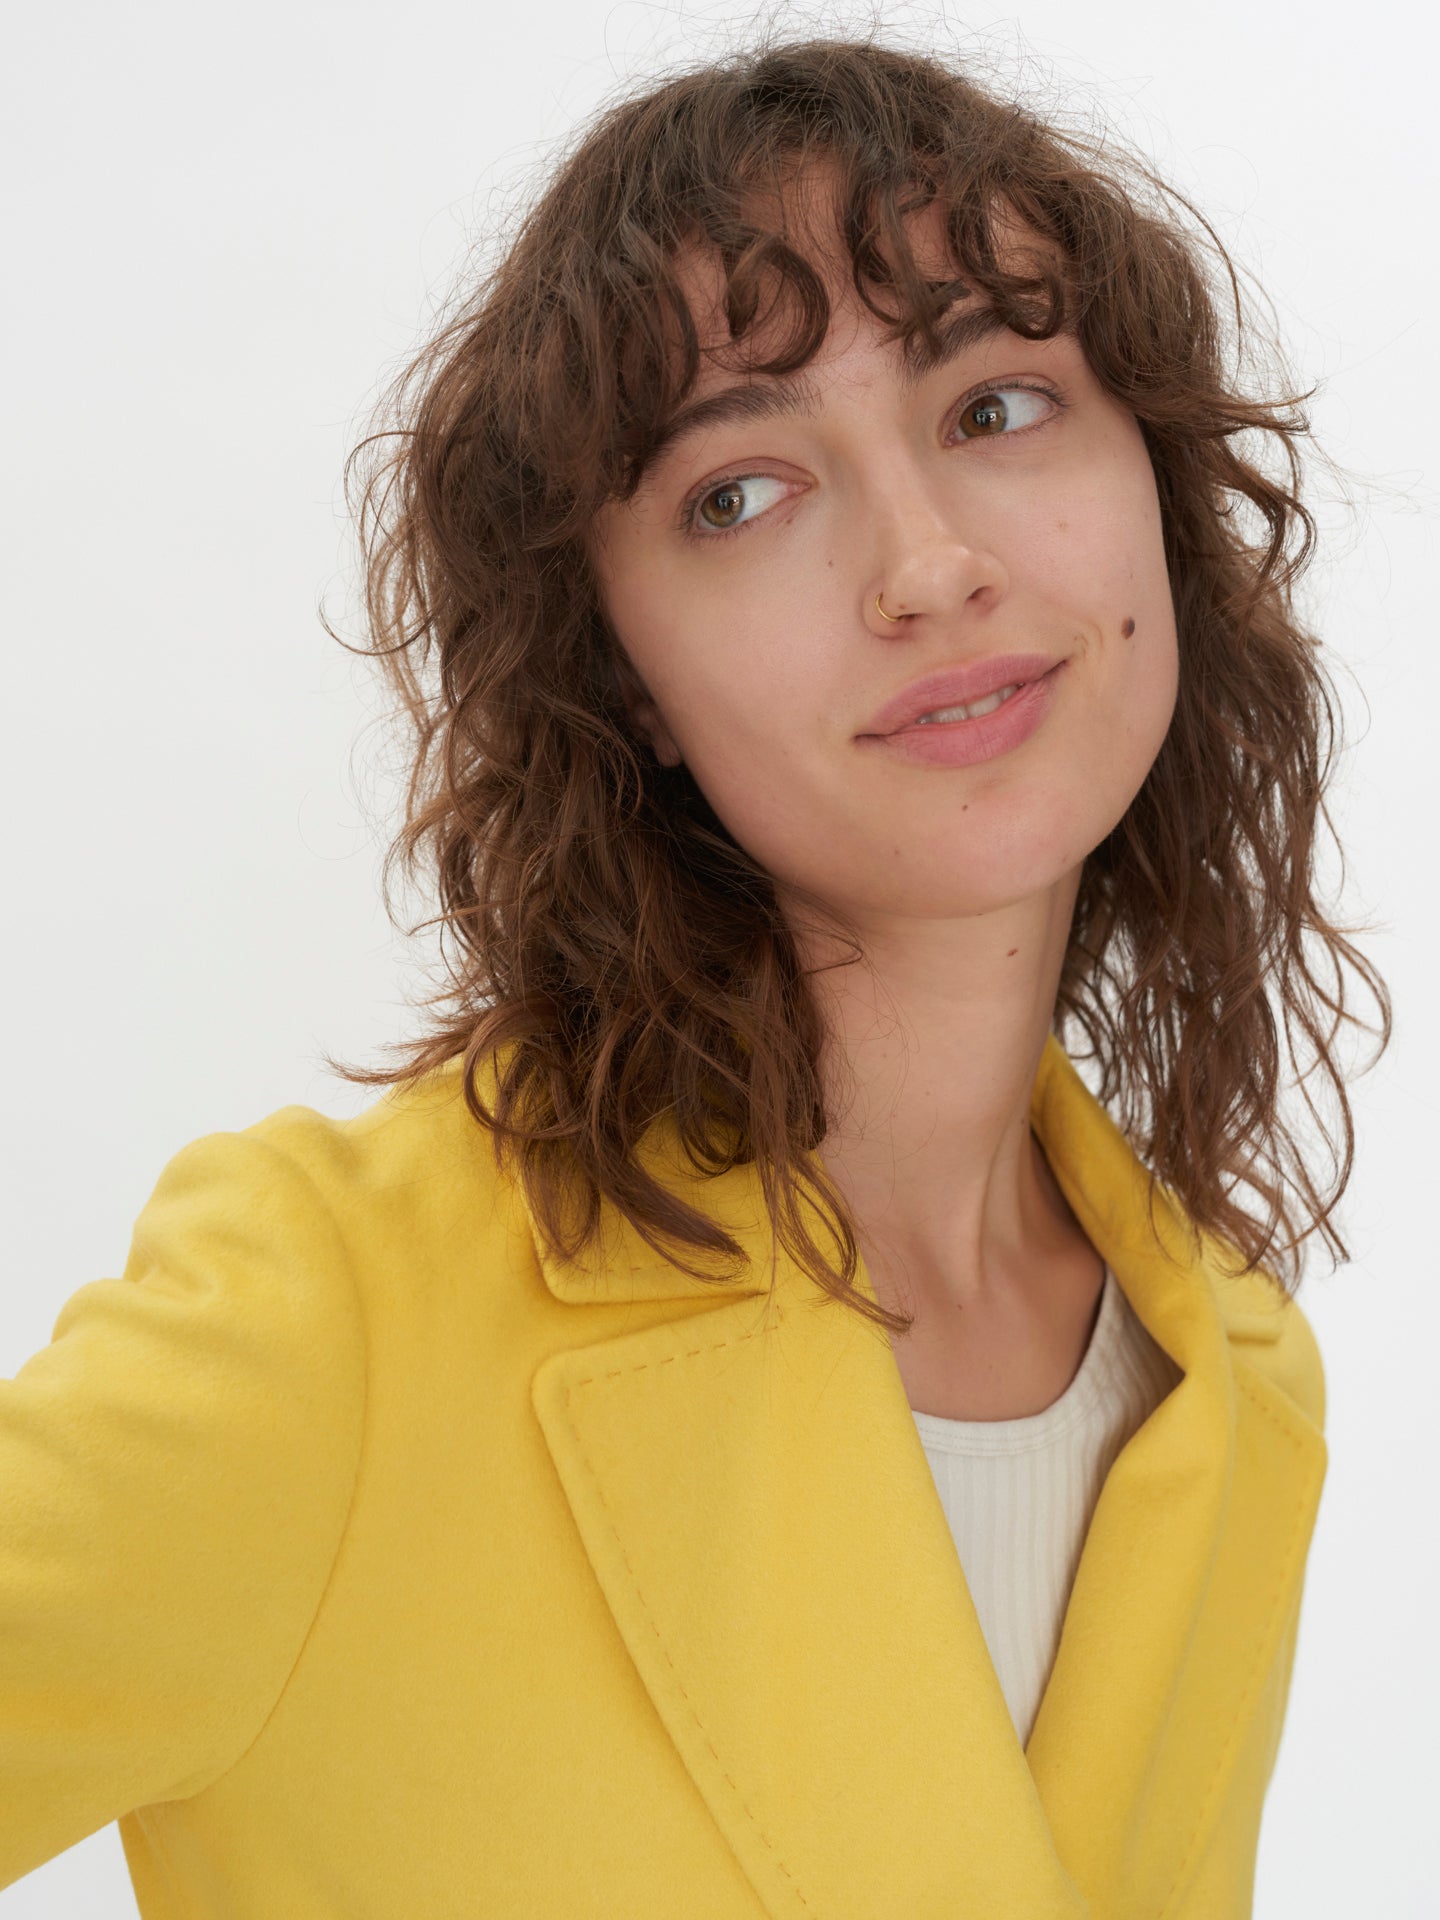 Women's Cashmere Belted Short Coat Yellow- Gobi Cashmere 